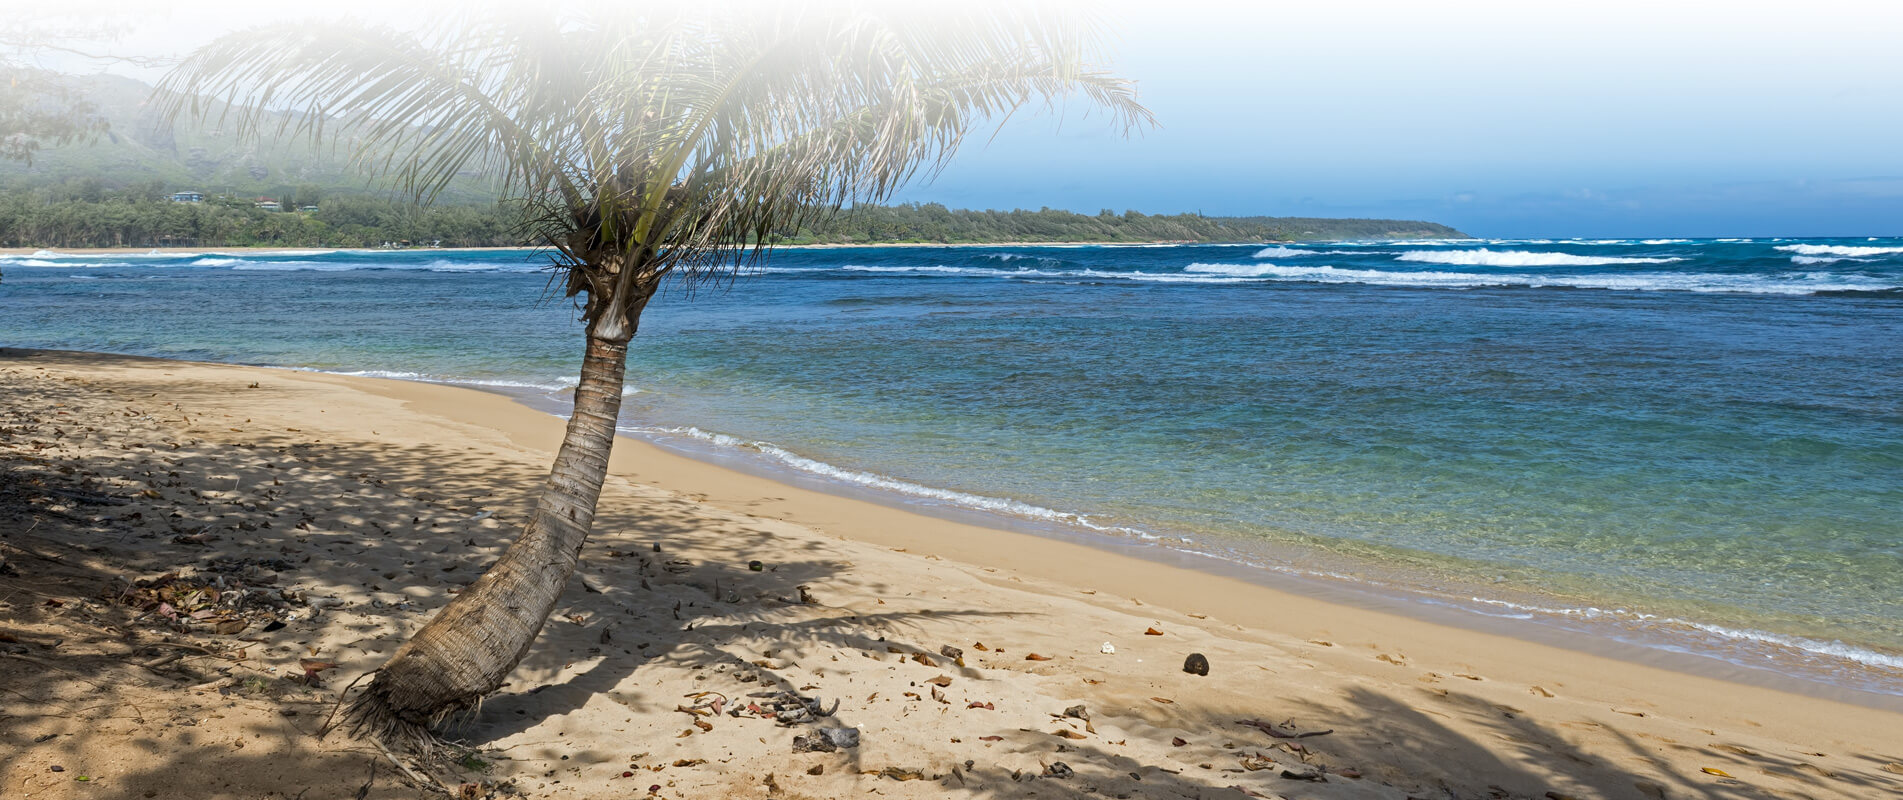 Beautiful palm-shaded spot on a Kauai beach